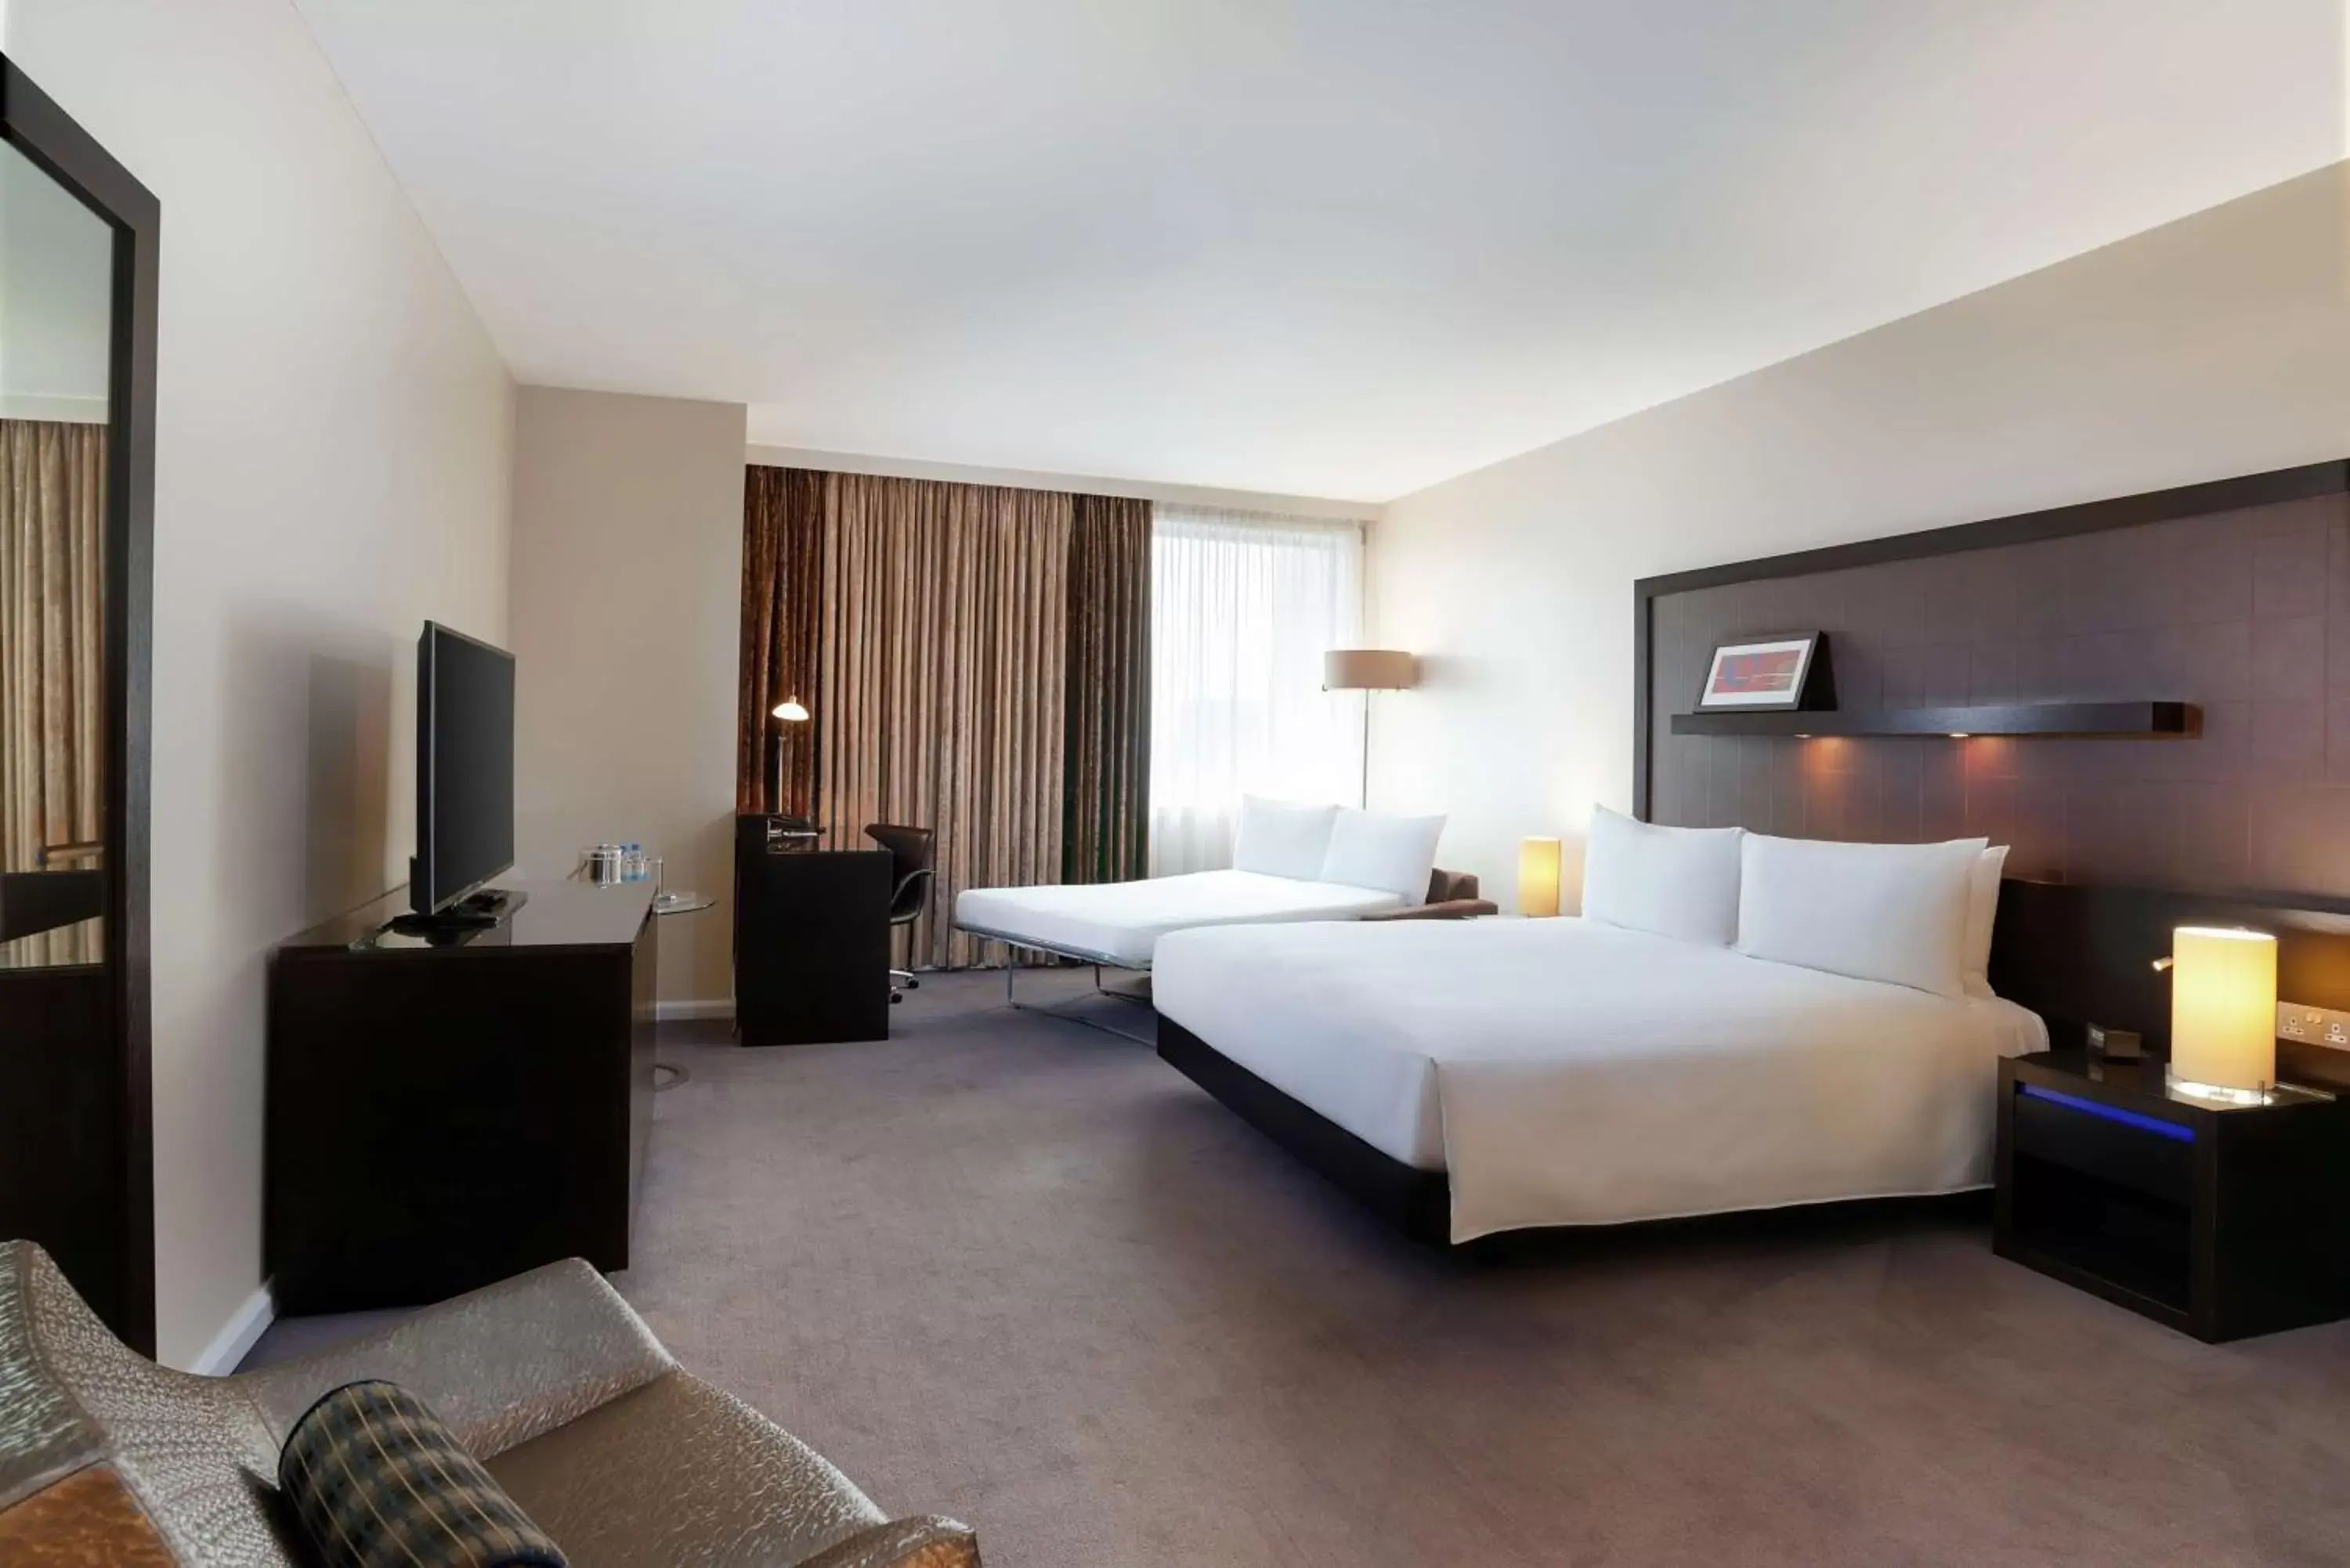 Bedroom in Hilton London Canary Wharf